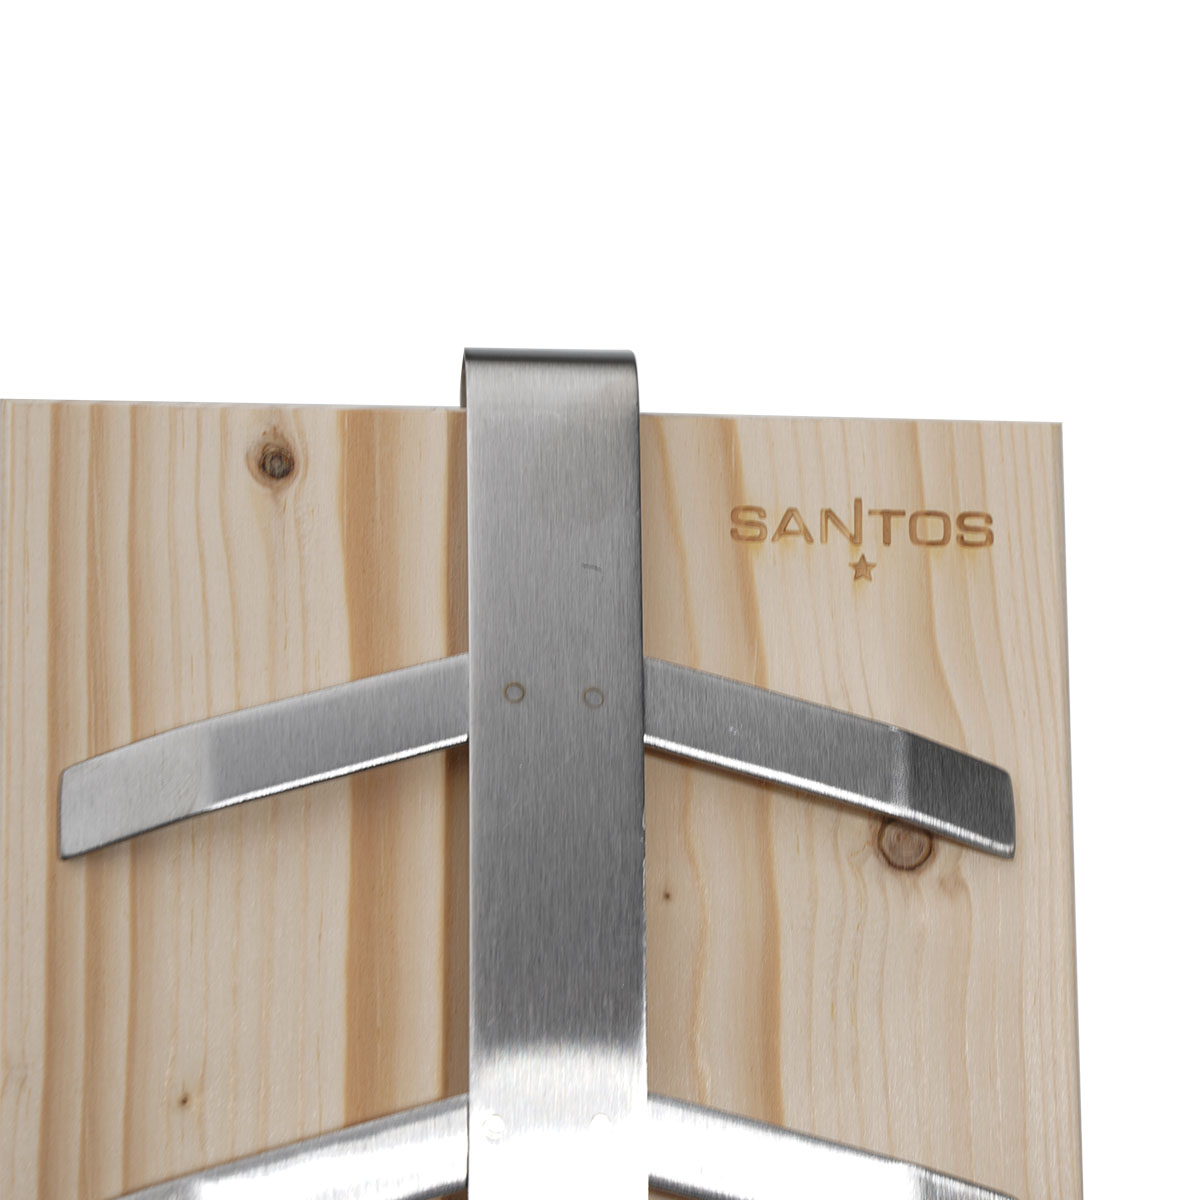 SANTOS Flammlachshalter aus Edelstahl inkl. Flammlachsbrett aus Zedernholz